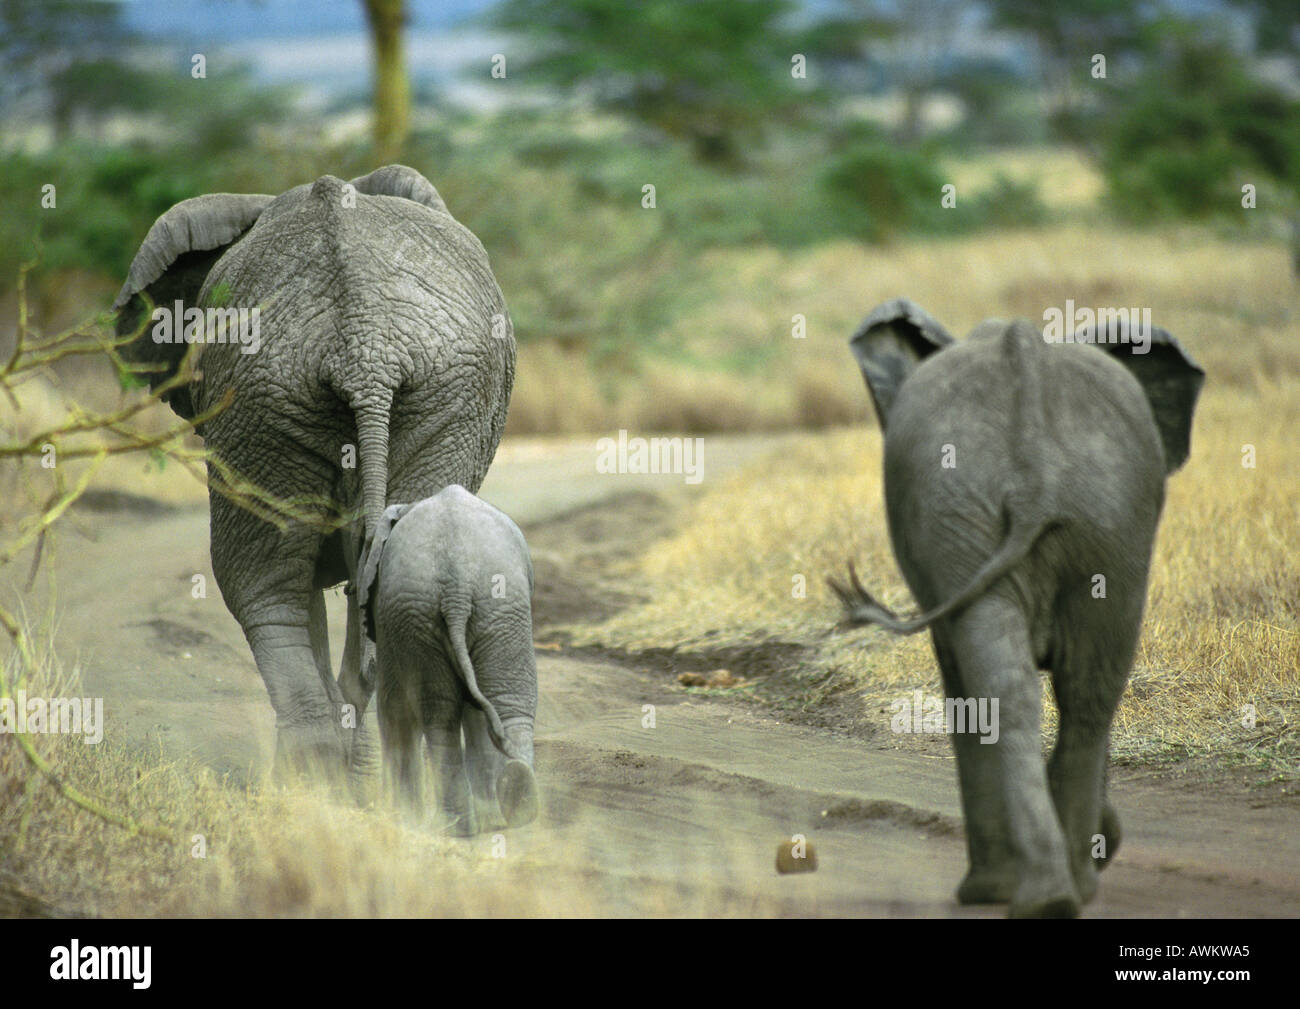 African Bush Elephant family (Loxodonta africana) walking on dirt path, Botswana, Africa, rear view Stock Photo